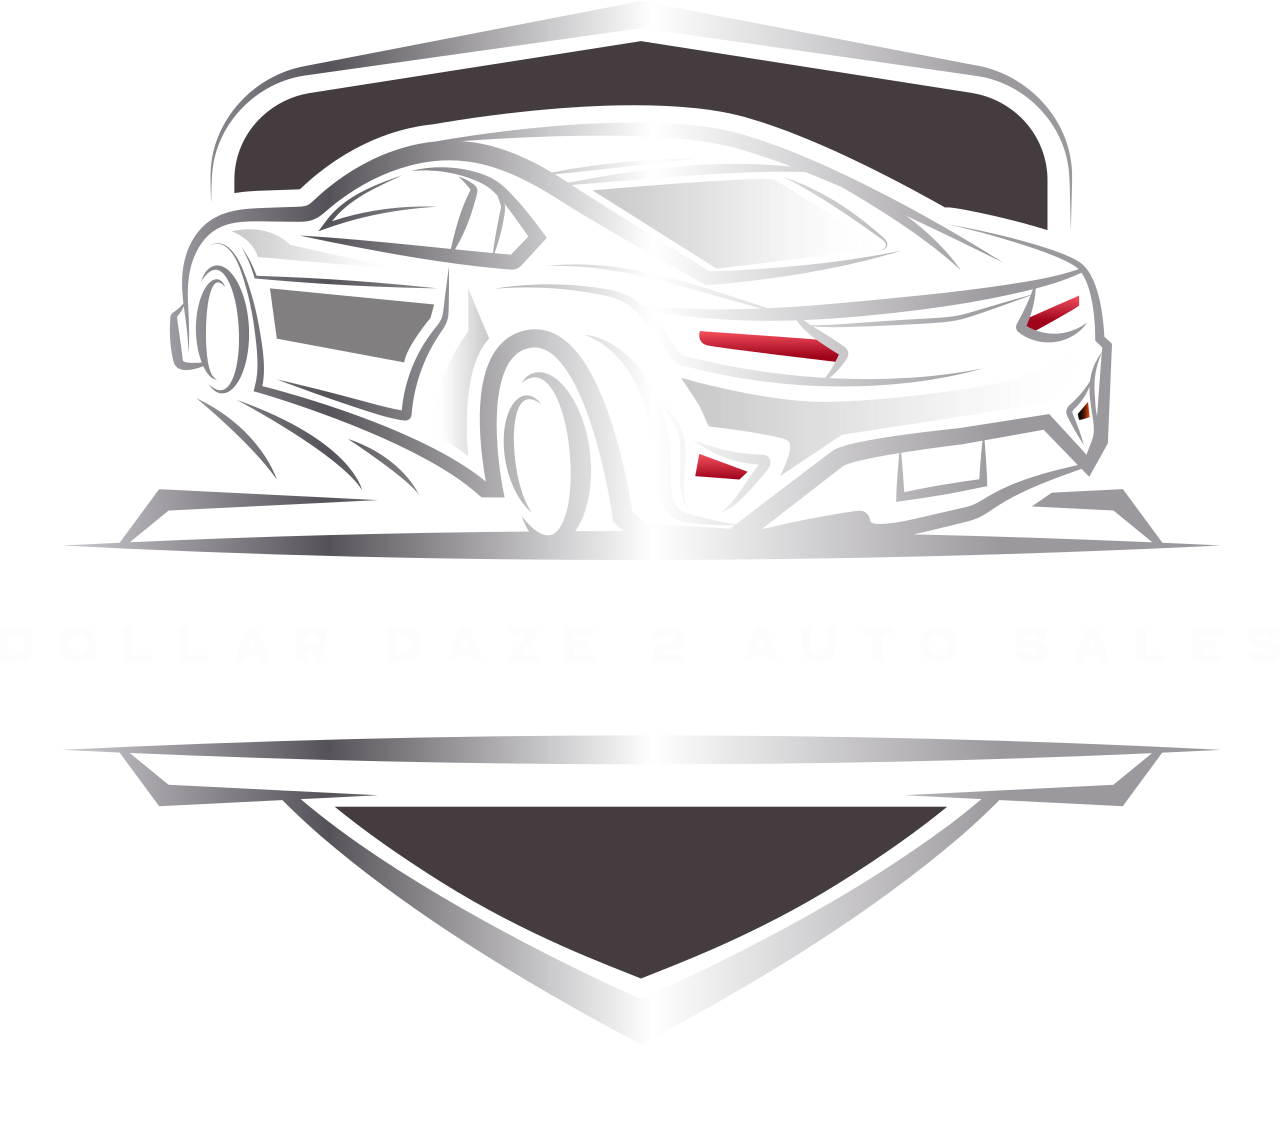 Dollar daze 2 auto sales's logo